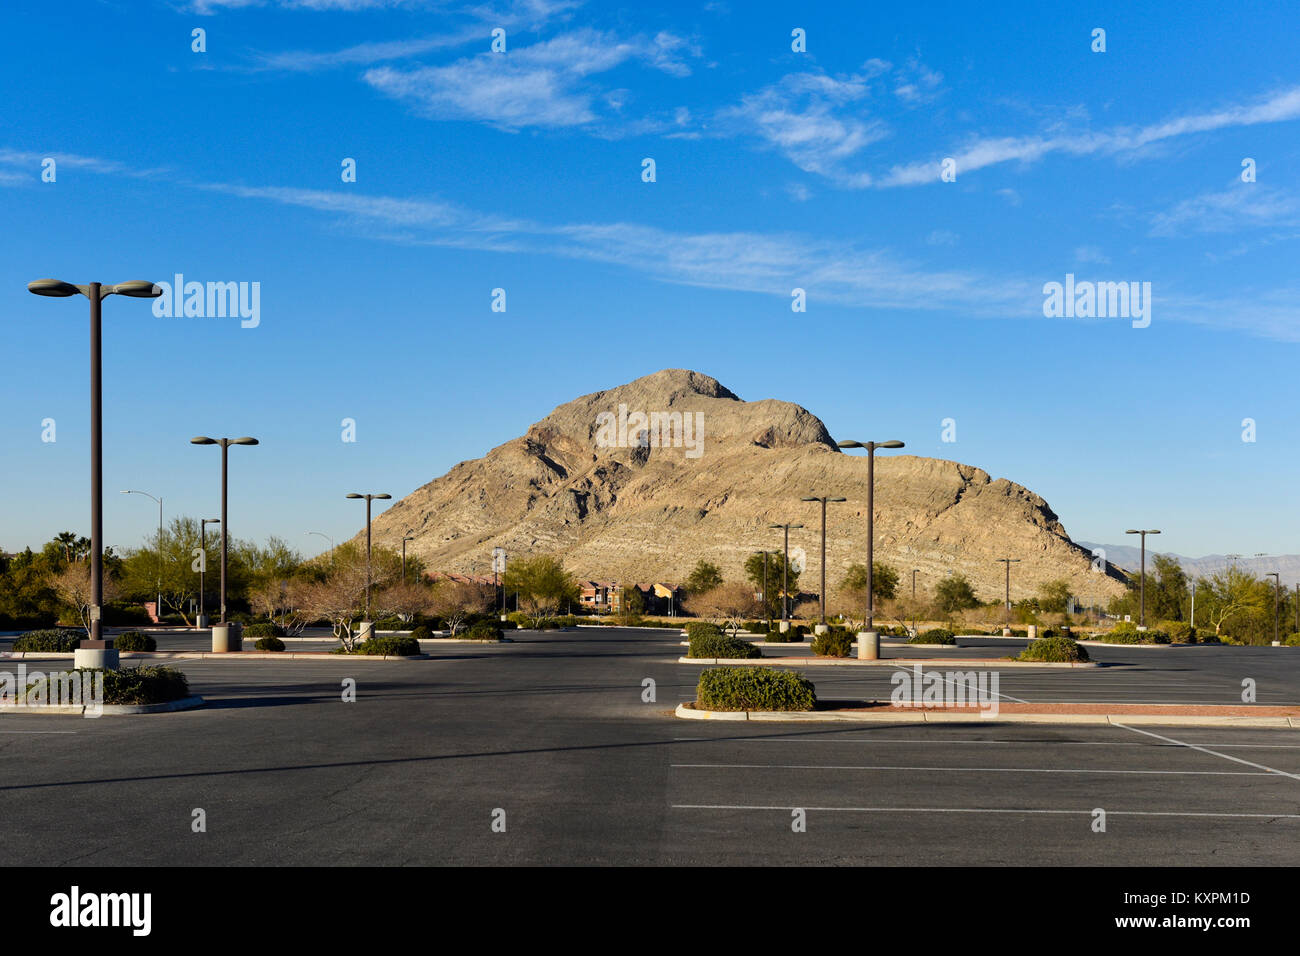 Lone Mountain am nordwestlichen Ende von Las Vegas. Stockfoto